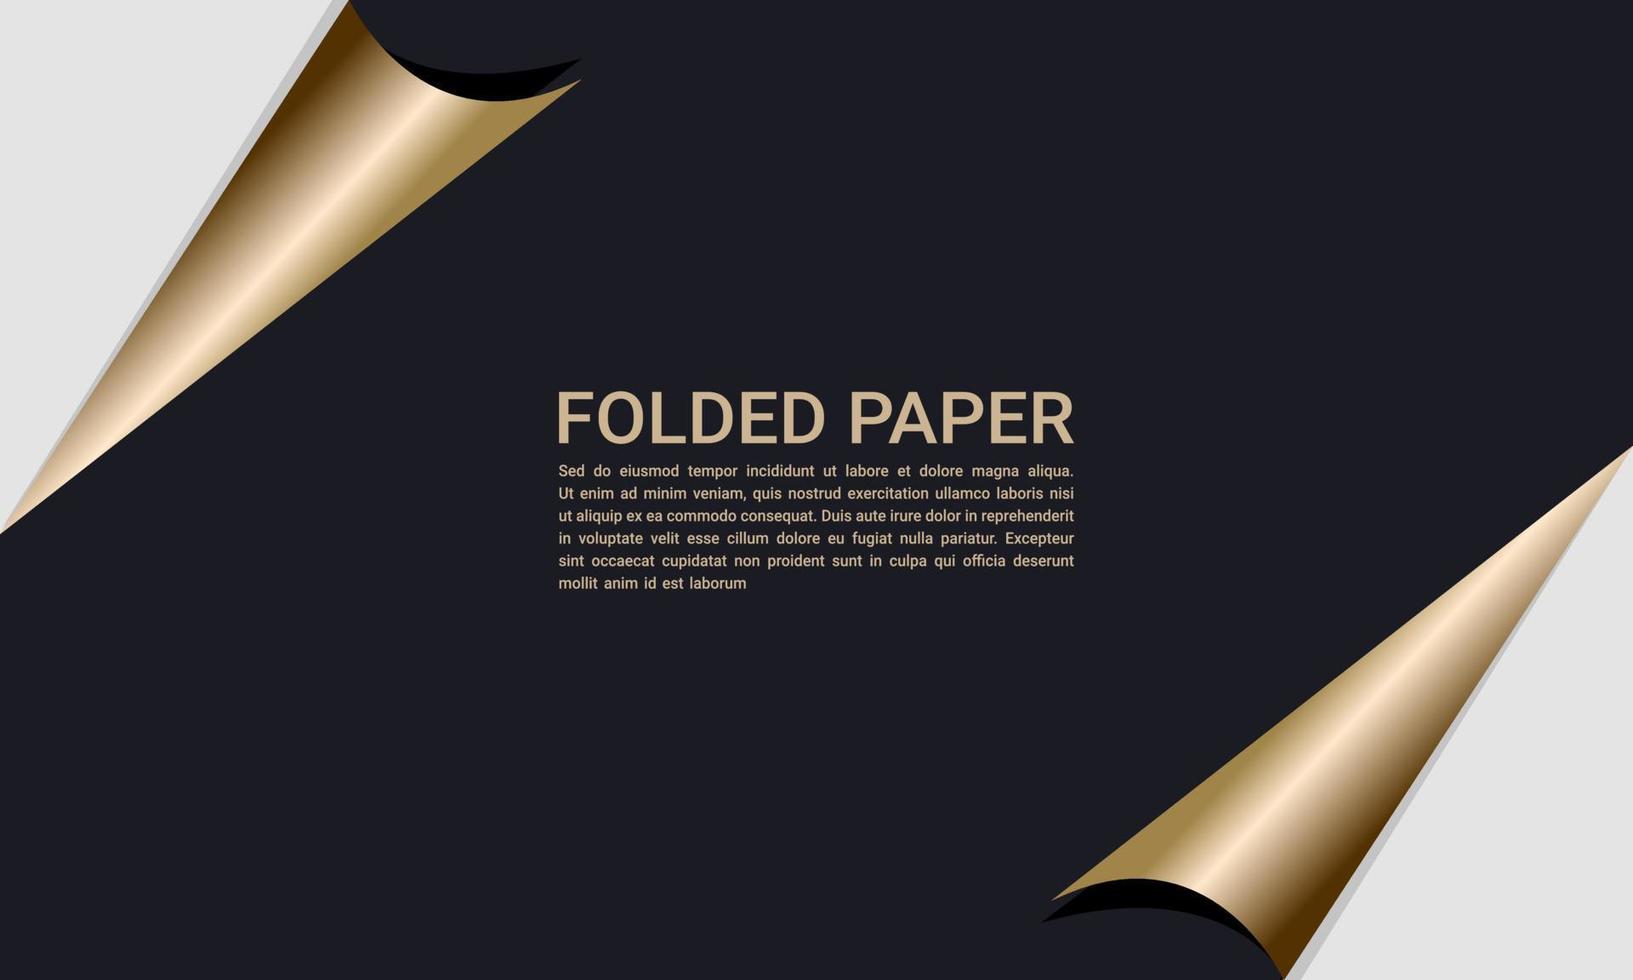 Realistic black color paper sheet with golden curved corners for sales banner, discount or web background. folded corner paper vector illustration.